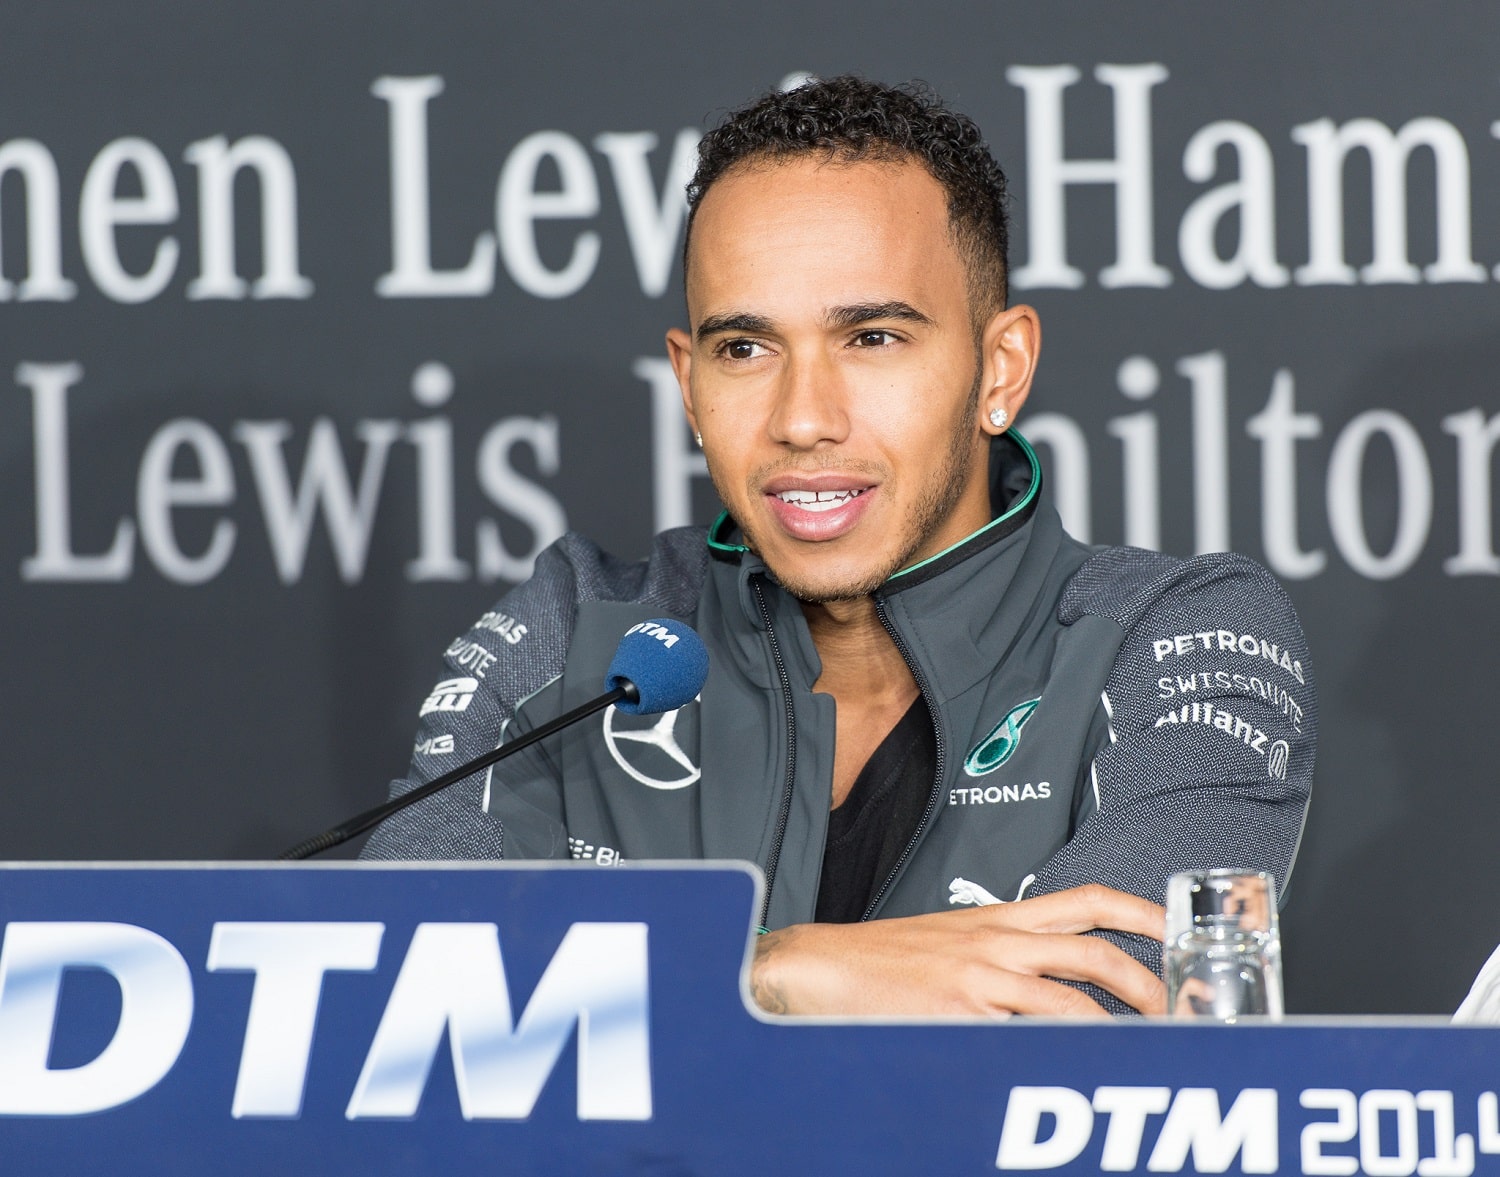 Lewis Hamilton Hair transplant